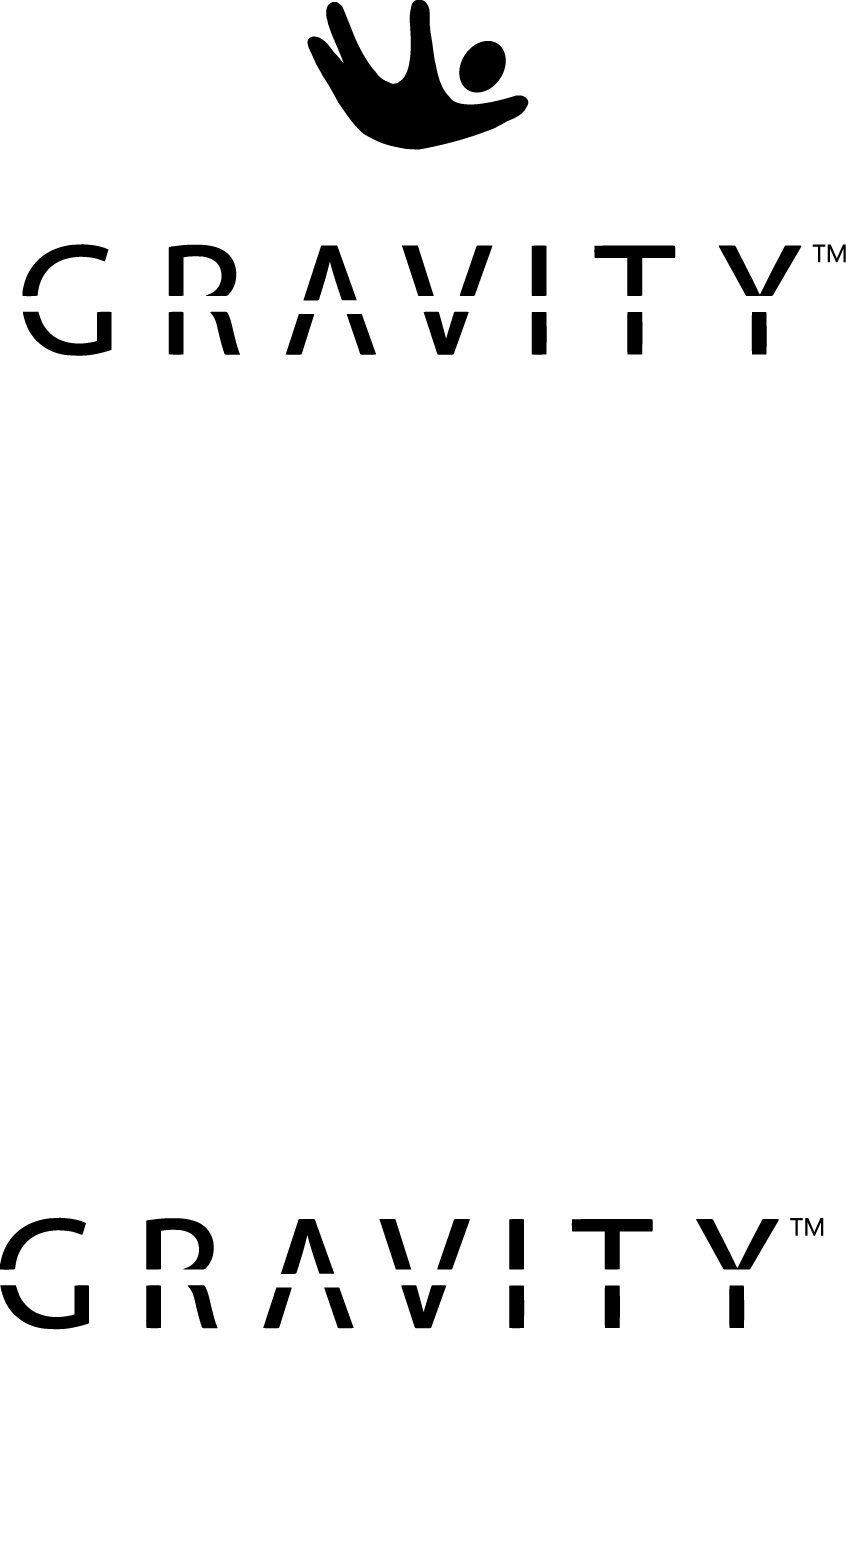 Gravity Blanket logo with shape